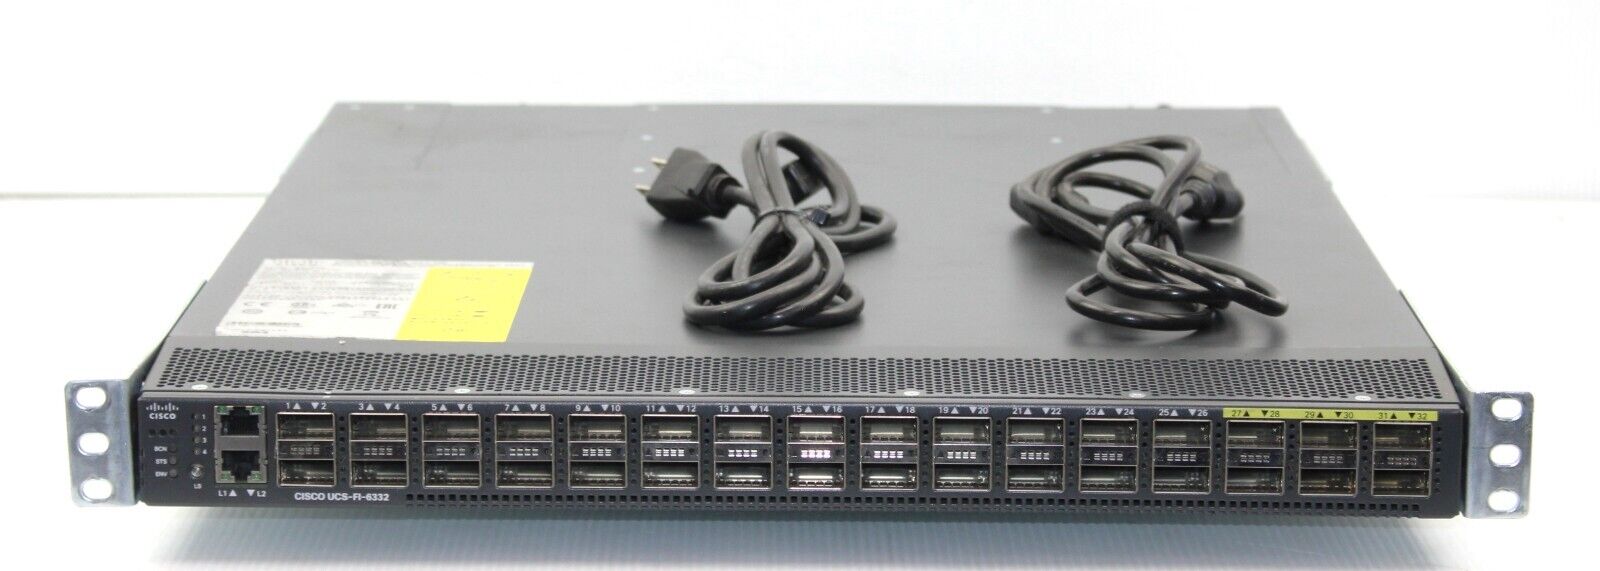 Cisco | UCS-FI-6332 | 32-Port Fabric Interconnect Switch